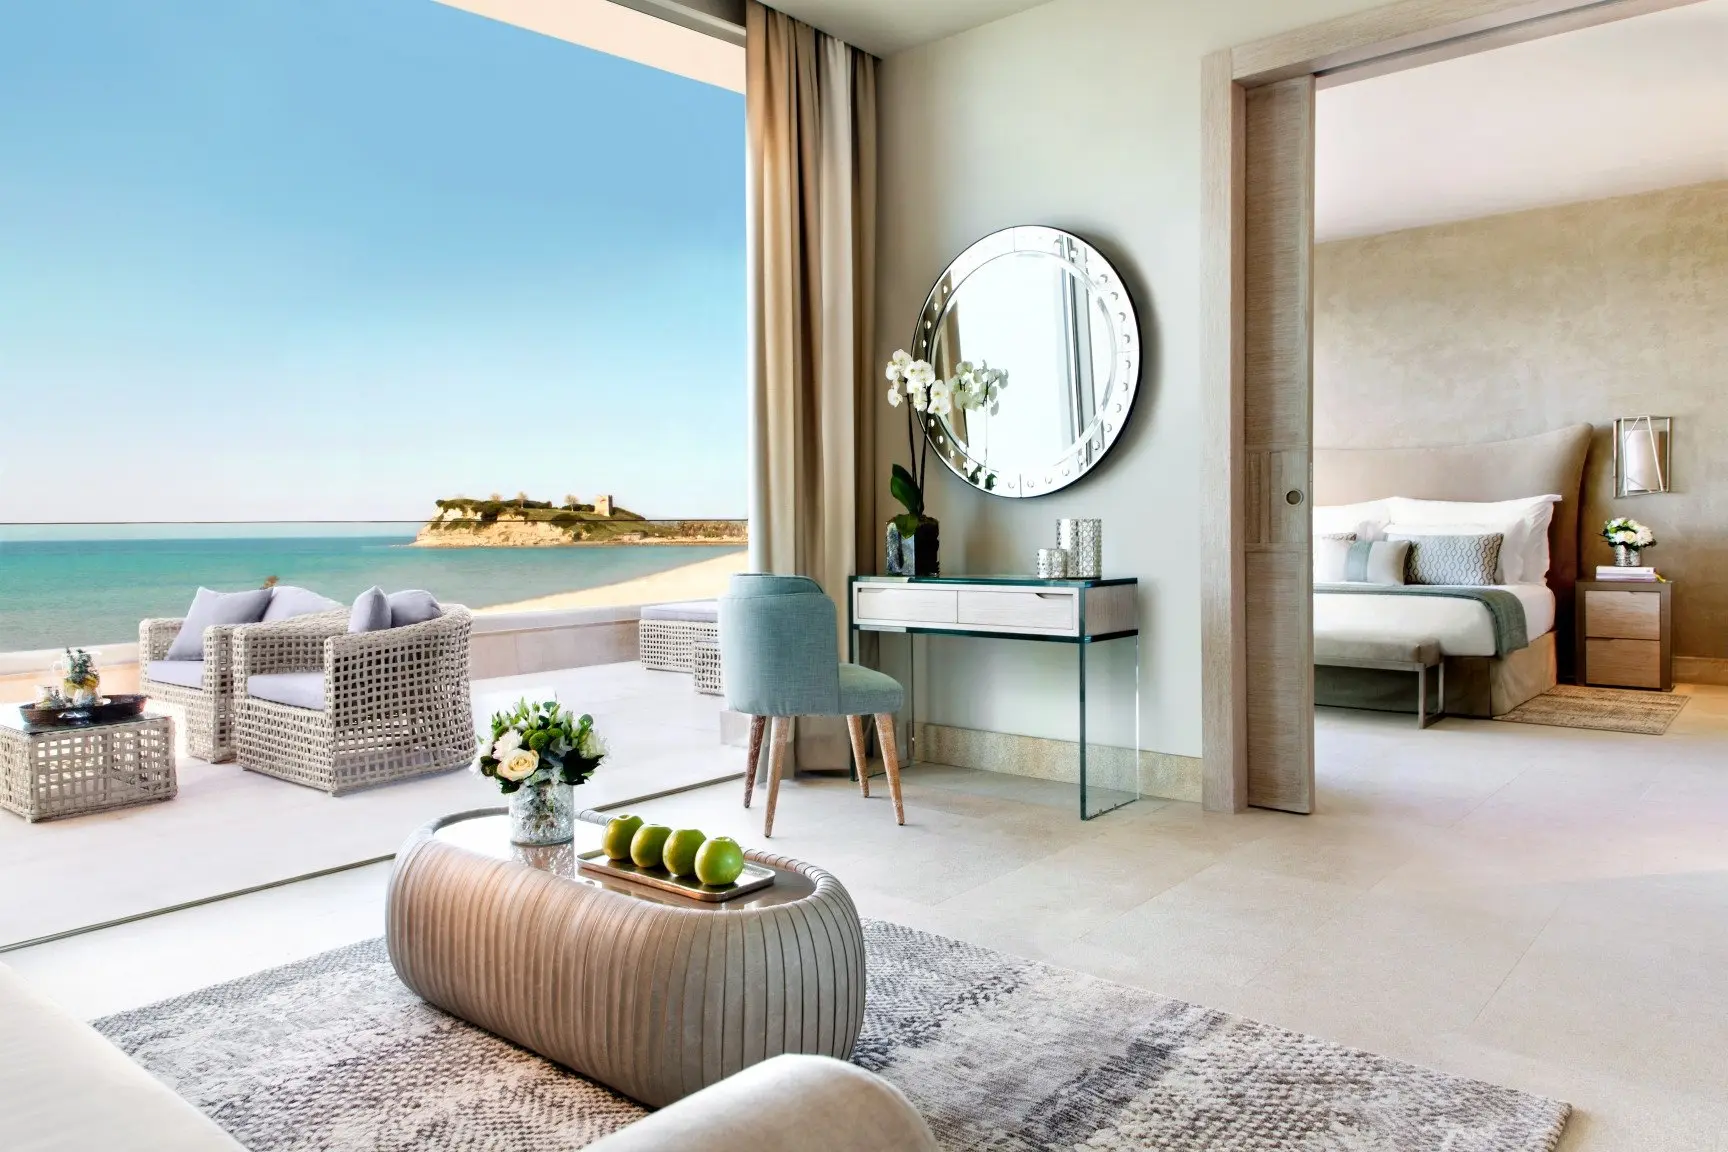 DLX_Beachfront_DLX-One-Bedroom-Suite-Grand-Balcony_edit